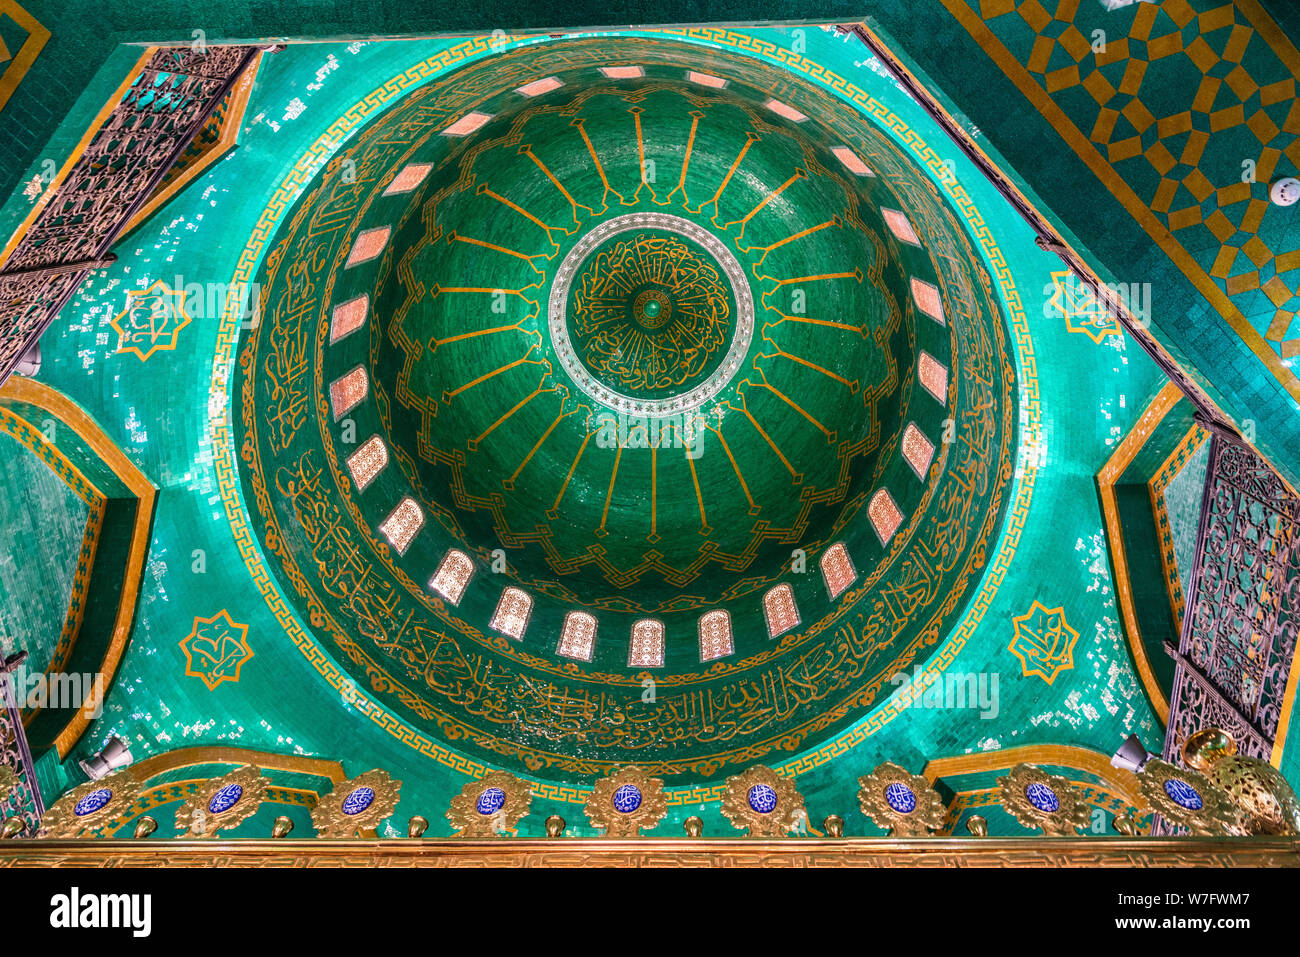 Bibi-Heybat, Baku, Azerbaijan - May 12, 2019. Interior view of the dome ceiling of Bibi-Heybat mosque in Baku, decorated with green and turquoise mosa Stock Photo